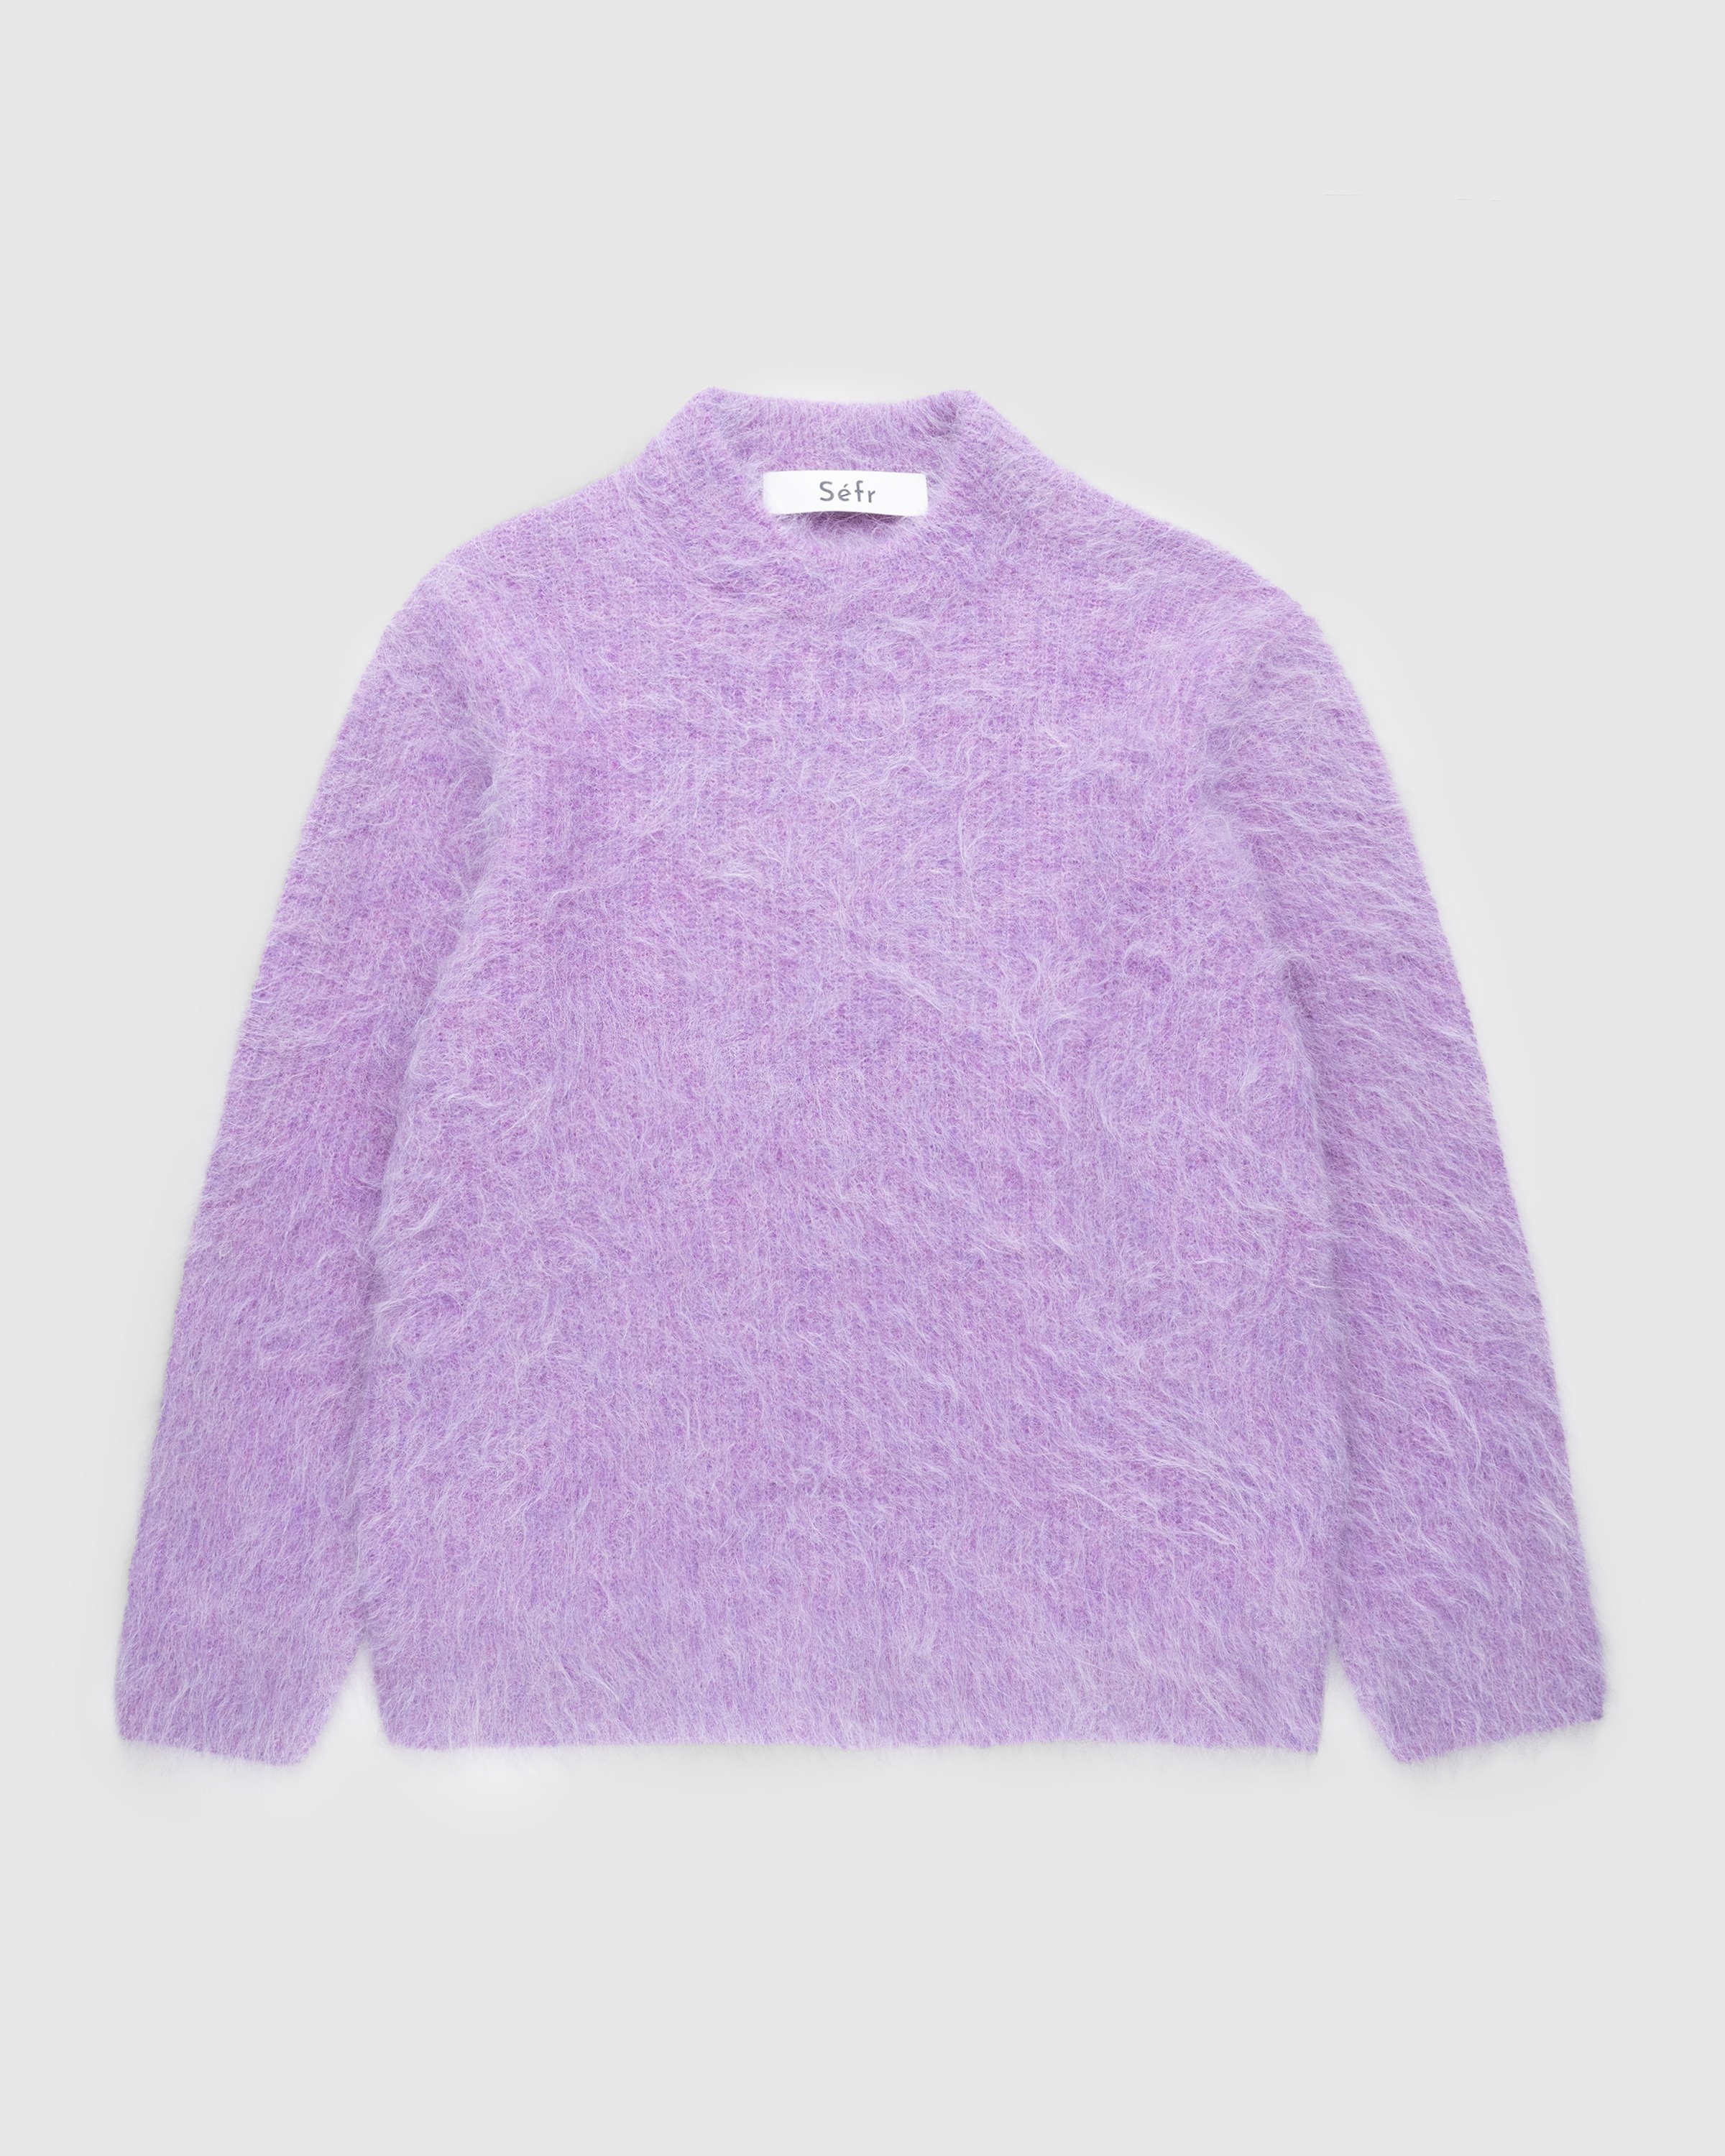 Séfr - Haru Sweater Malbec - Clothing - Purple - Image 1